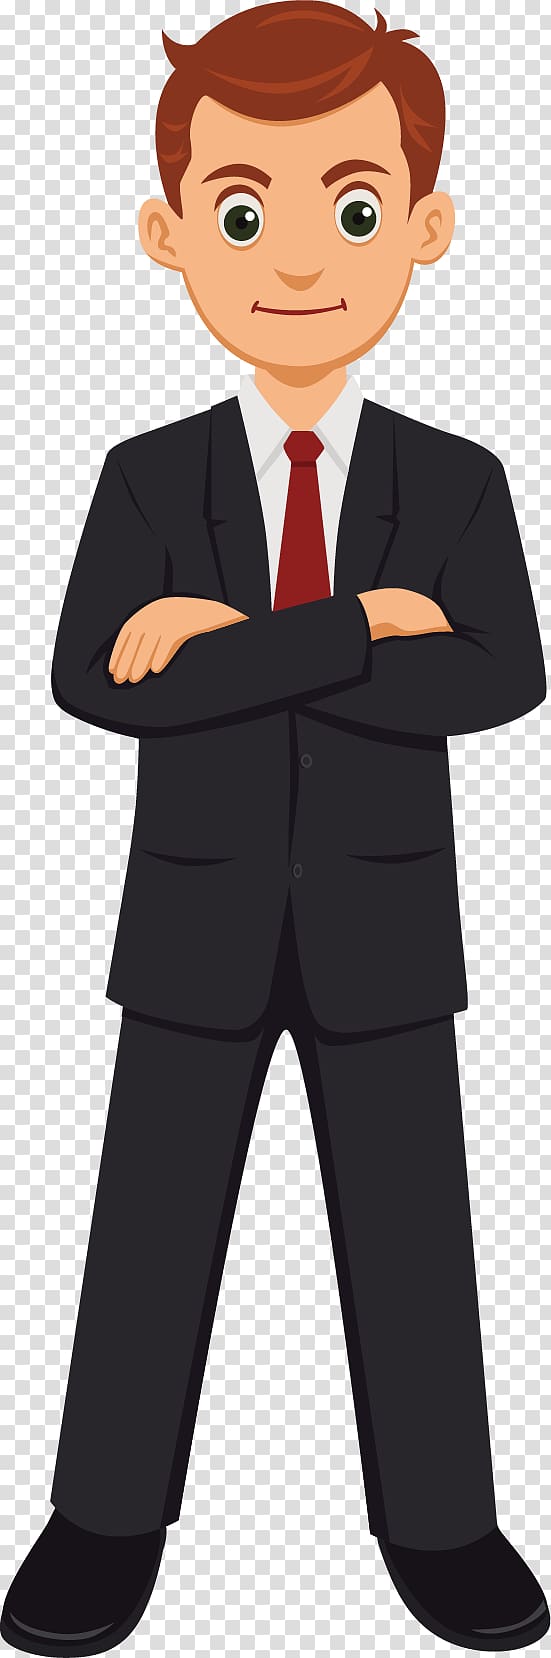 cartoon man in black suit